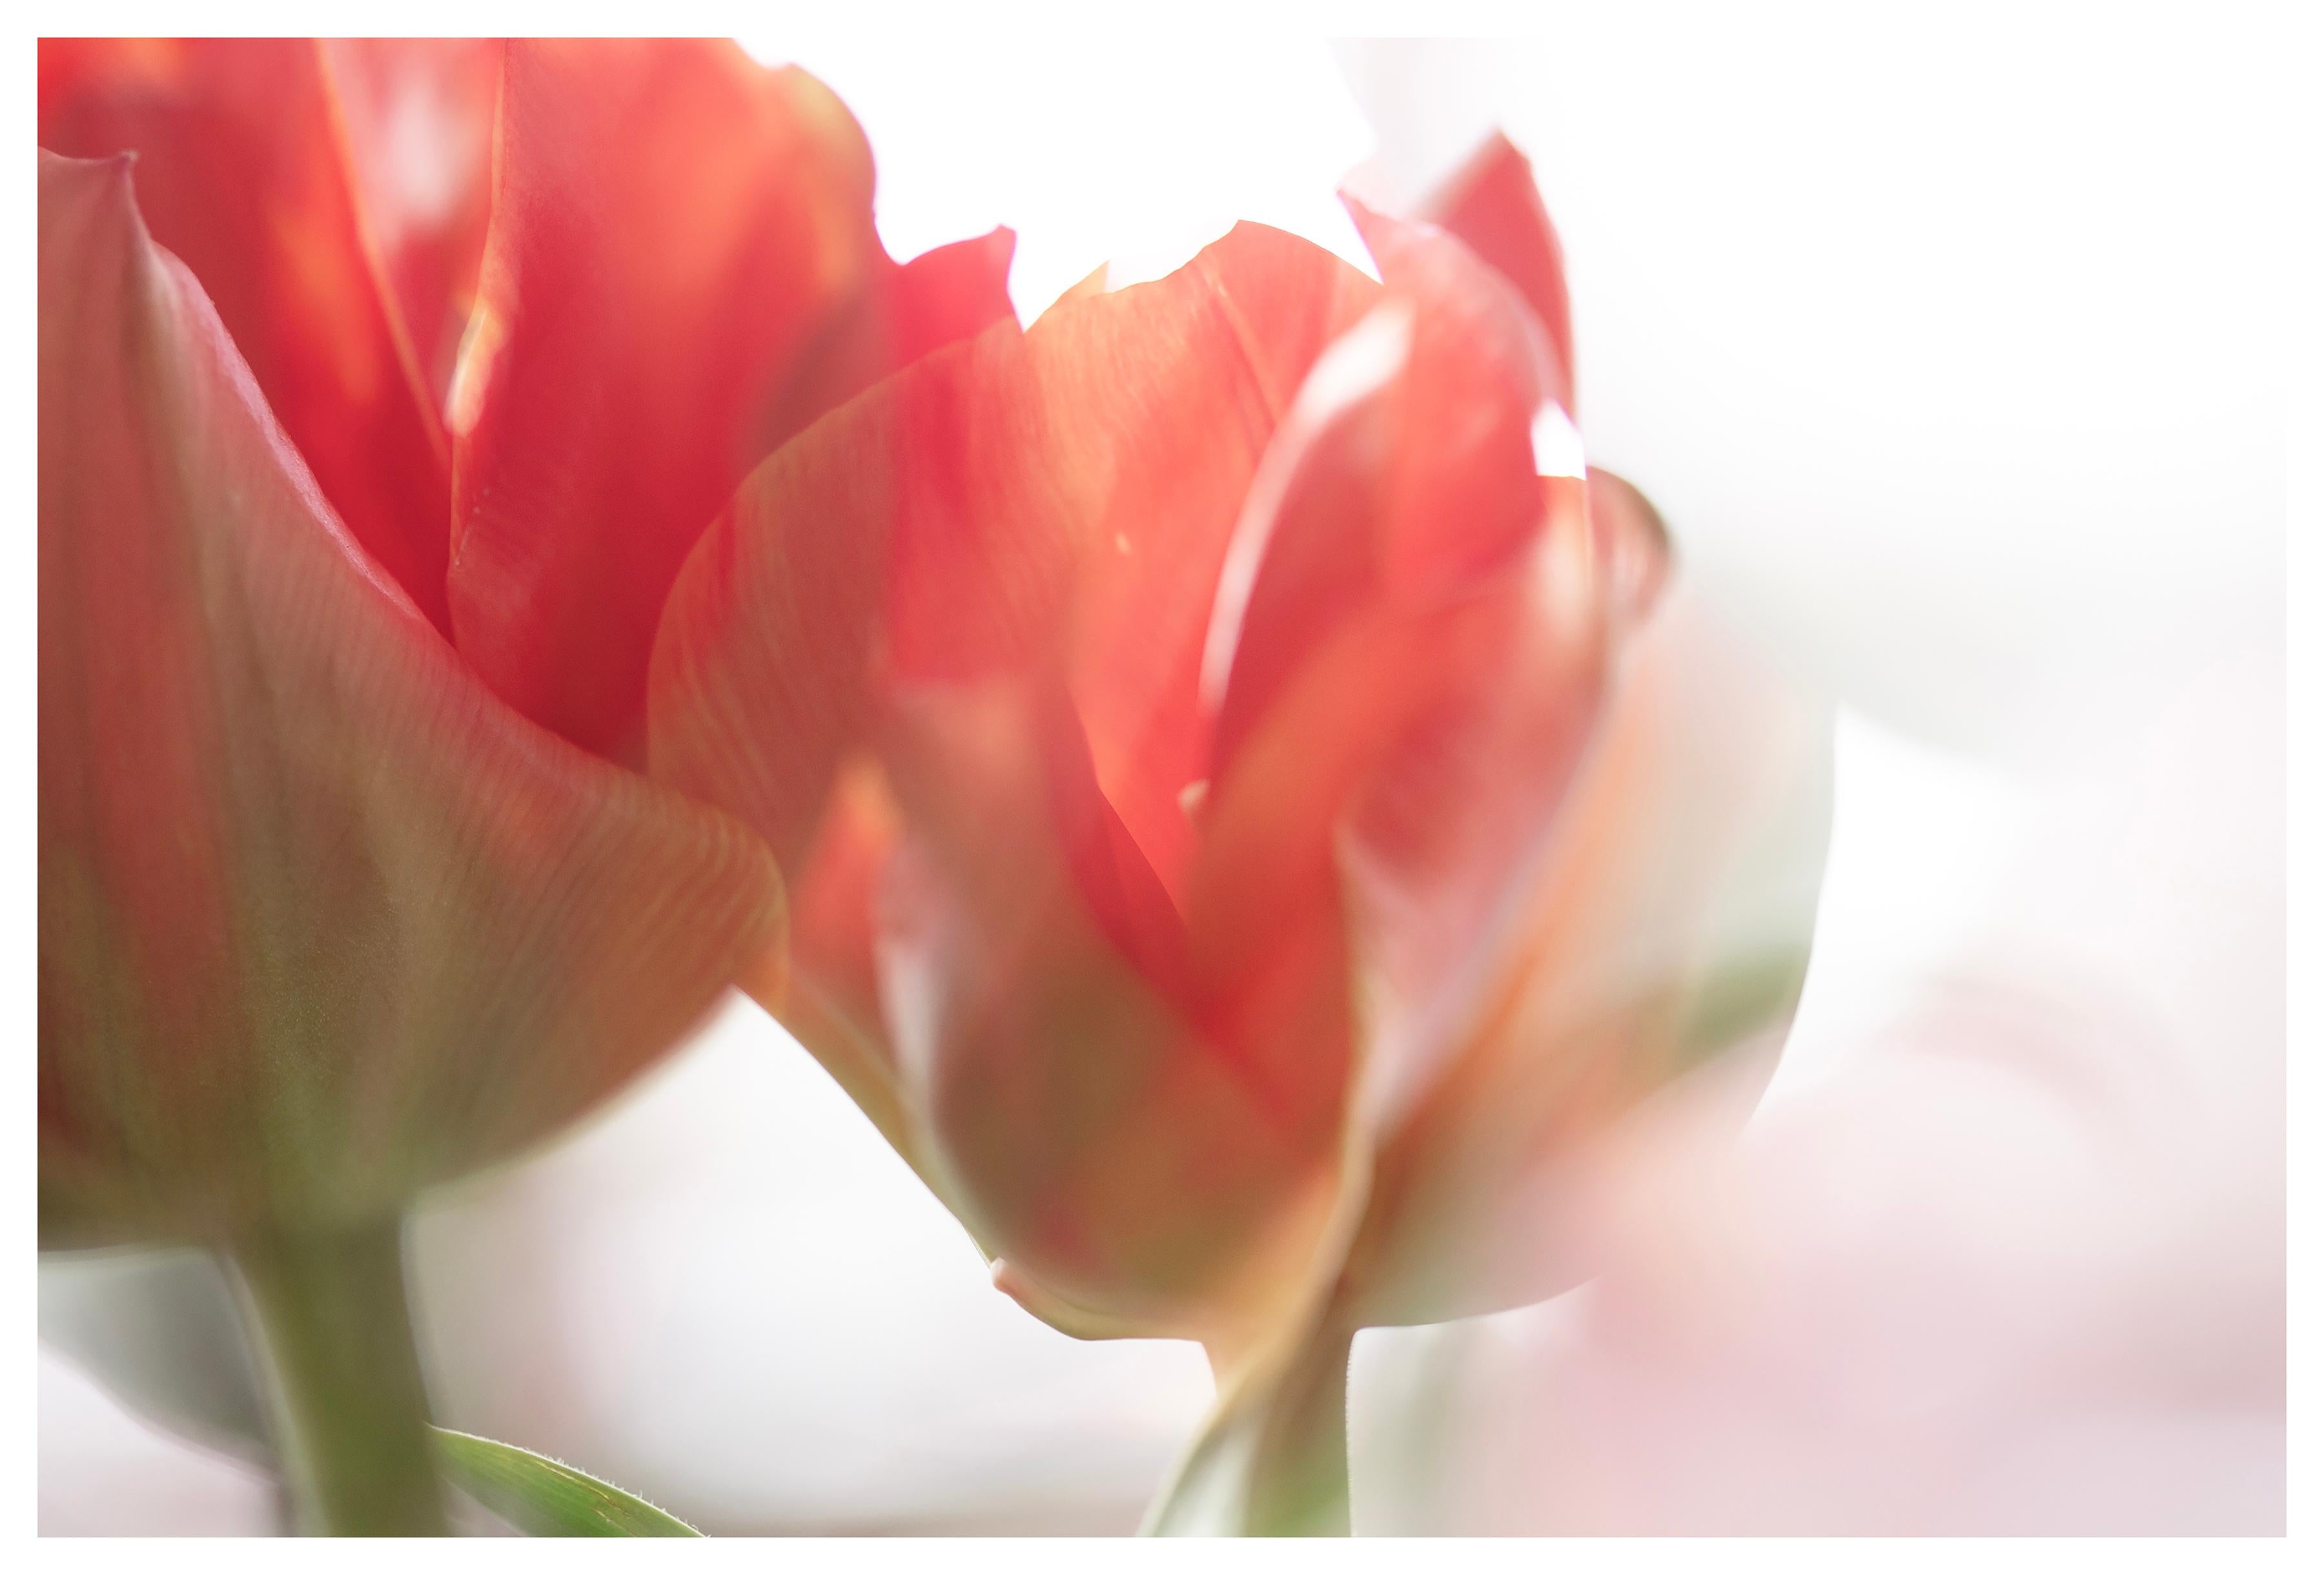 Sophia Milligan Abstract Photograph – „Sunday's Tulips (I)“ Großformatige Fotografie kräftige Blume pastellrot orangeweiß